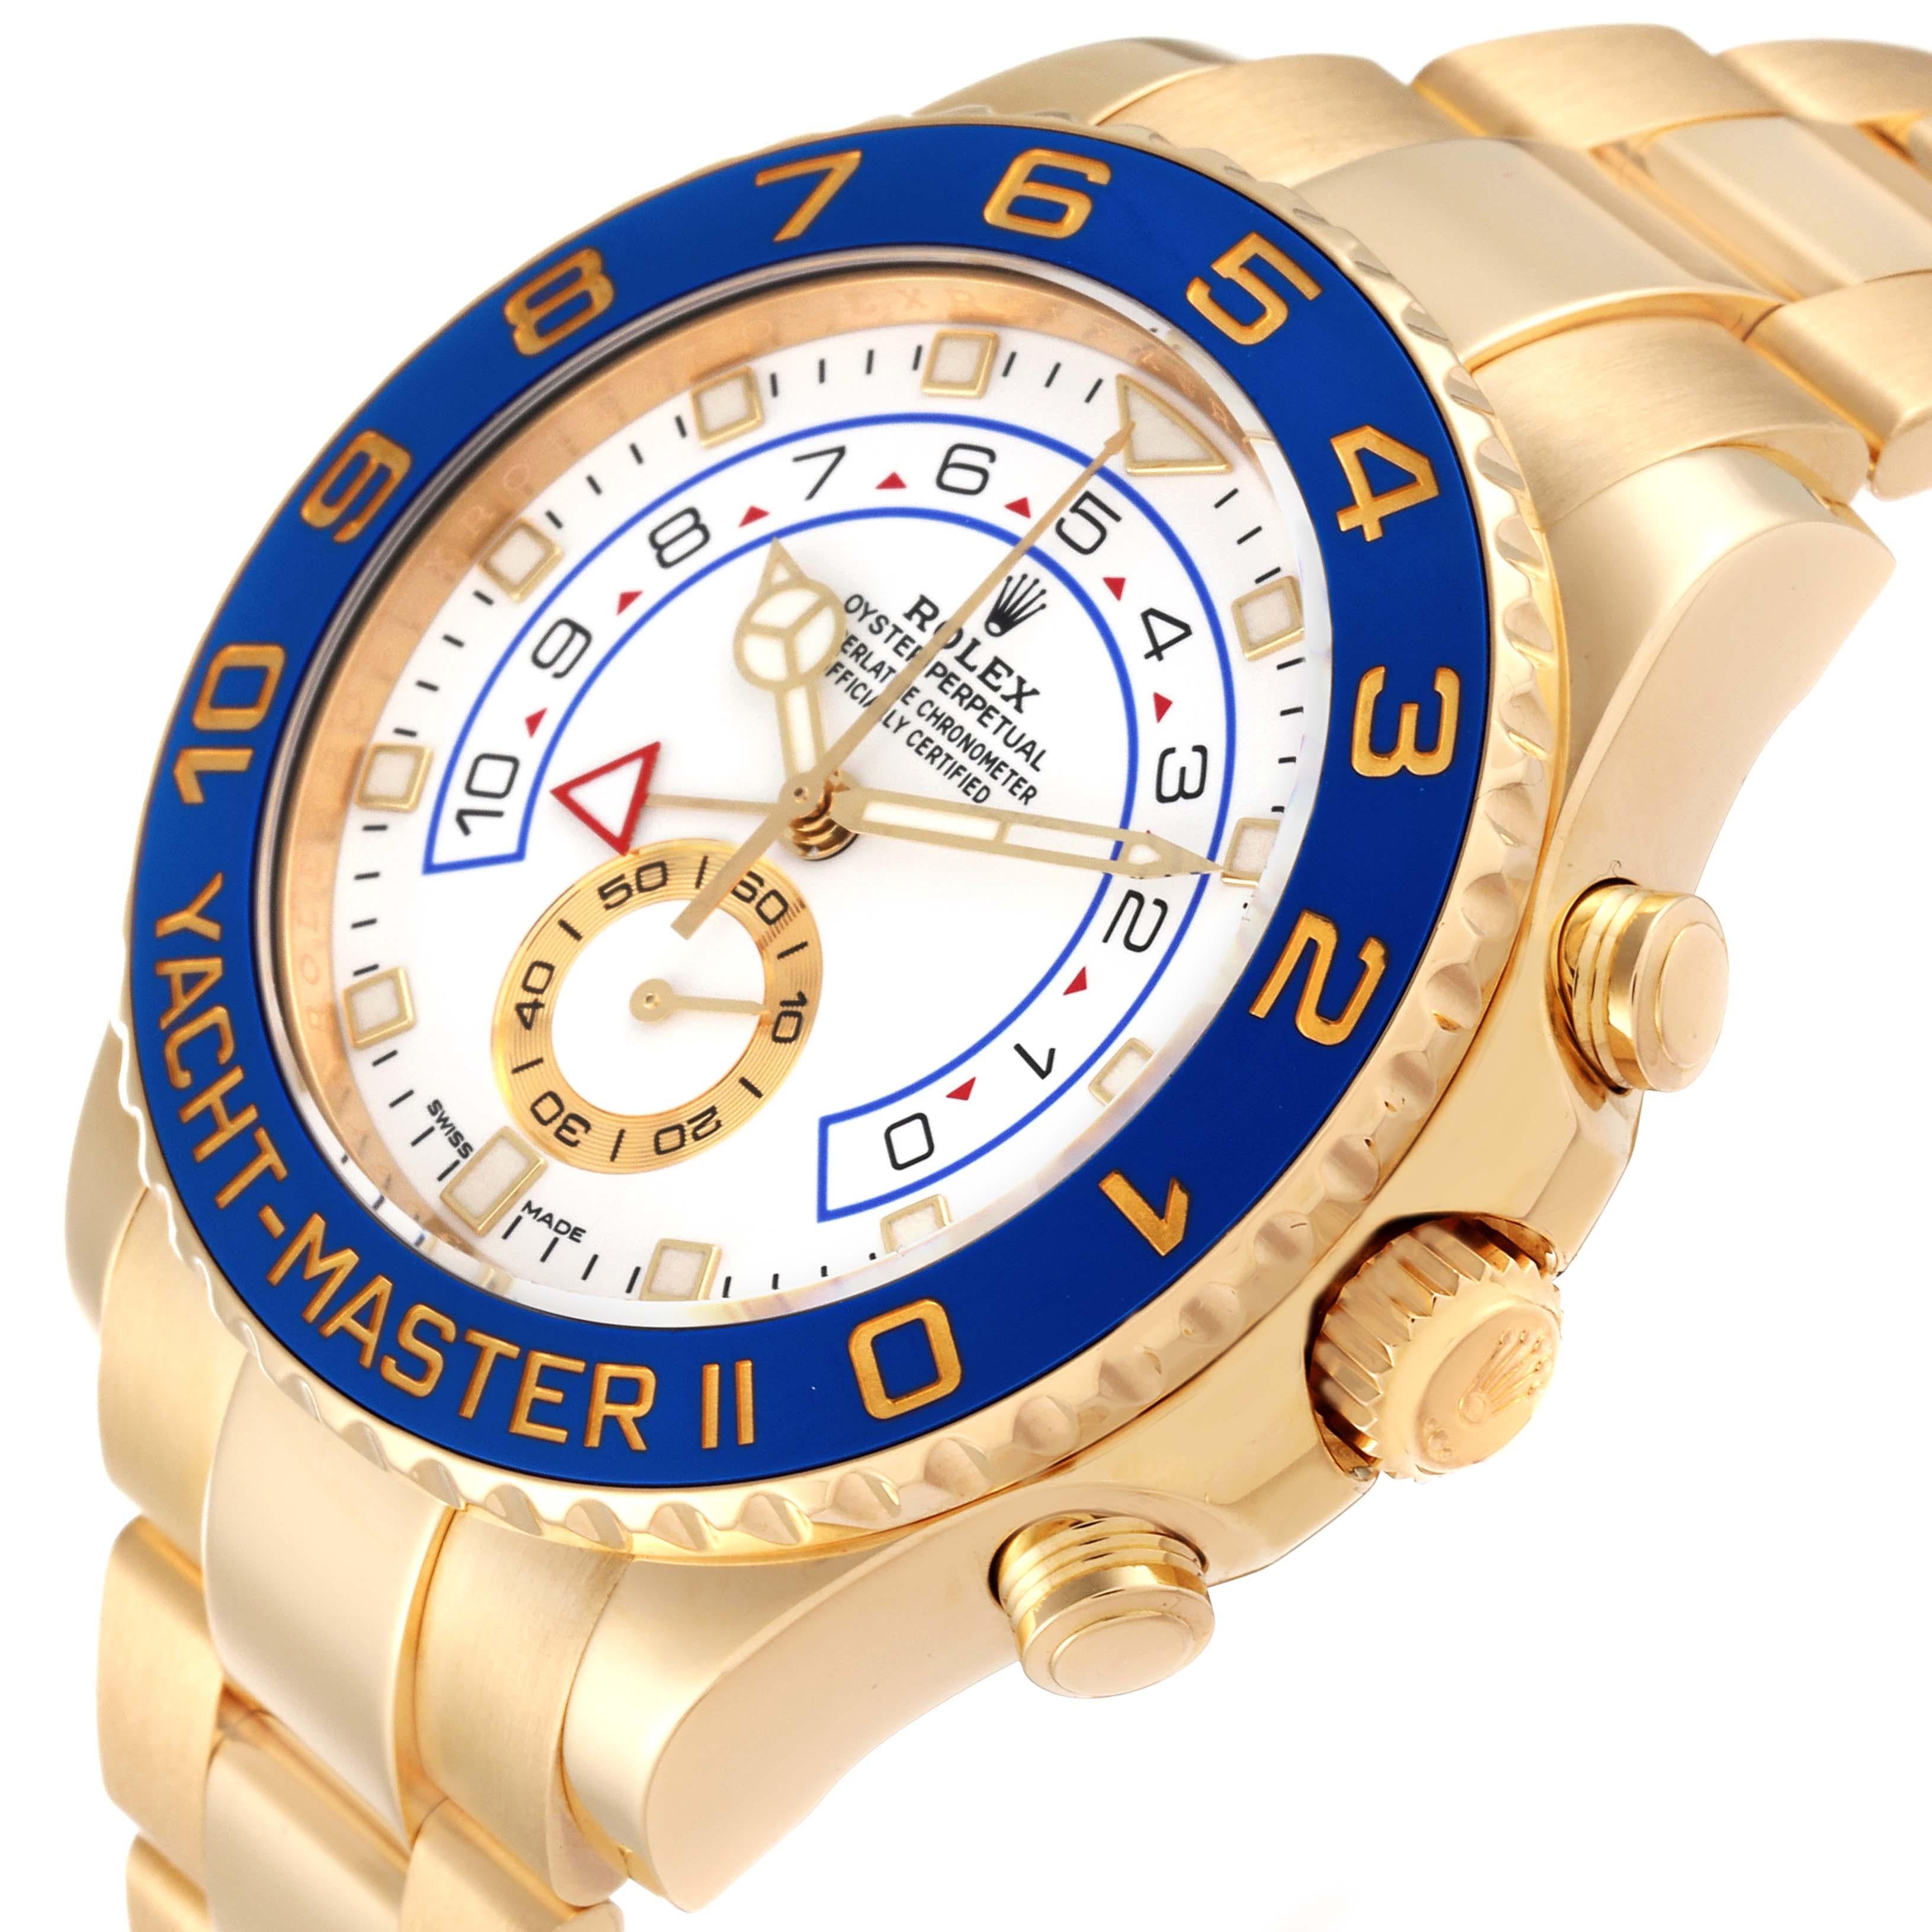 Rolex Yachtmaster II Regatta Chronograph Yellow Gold Men's Watch 116688 Box Card 1